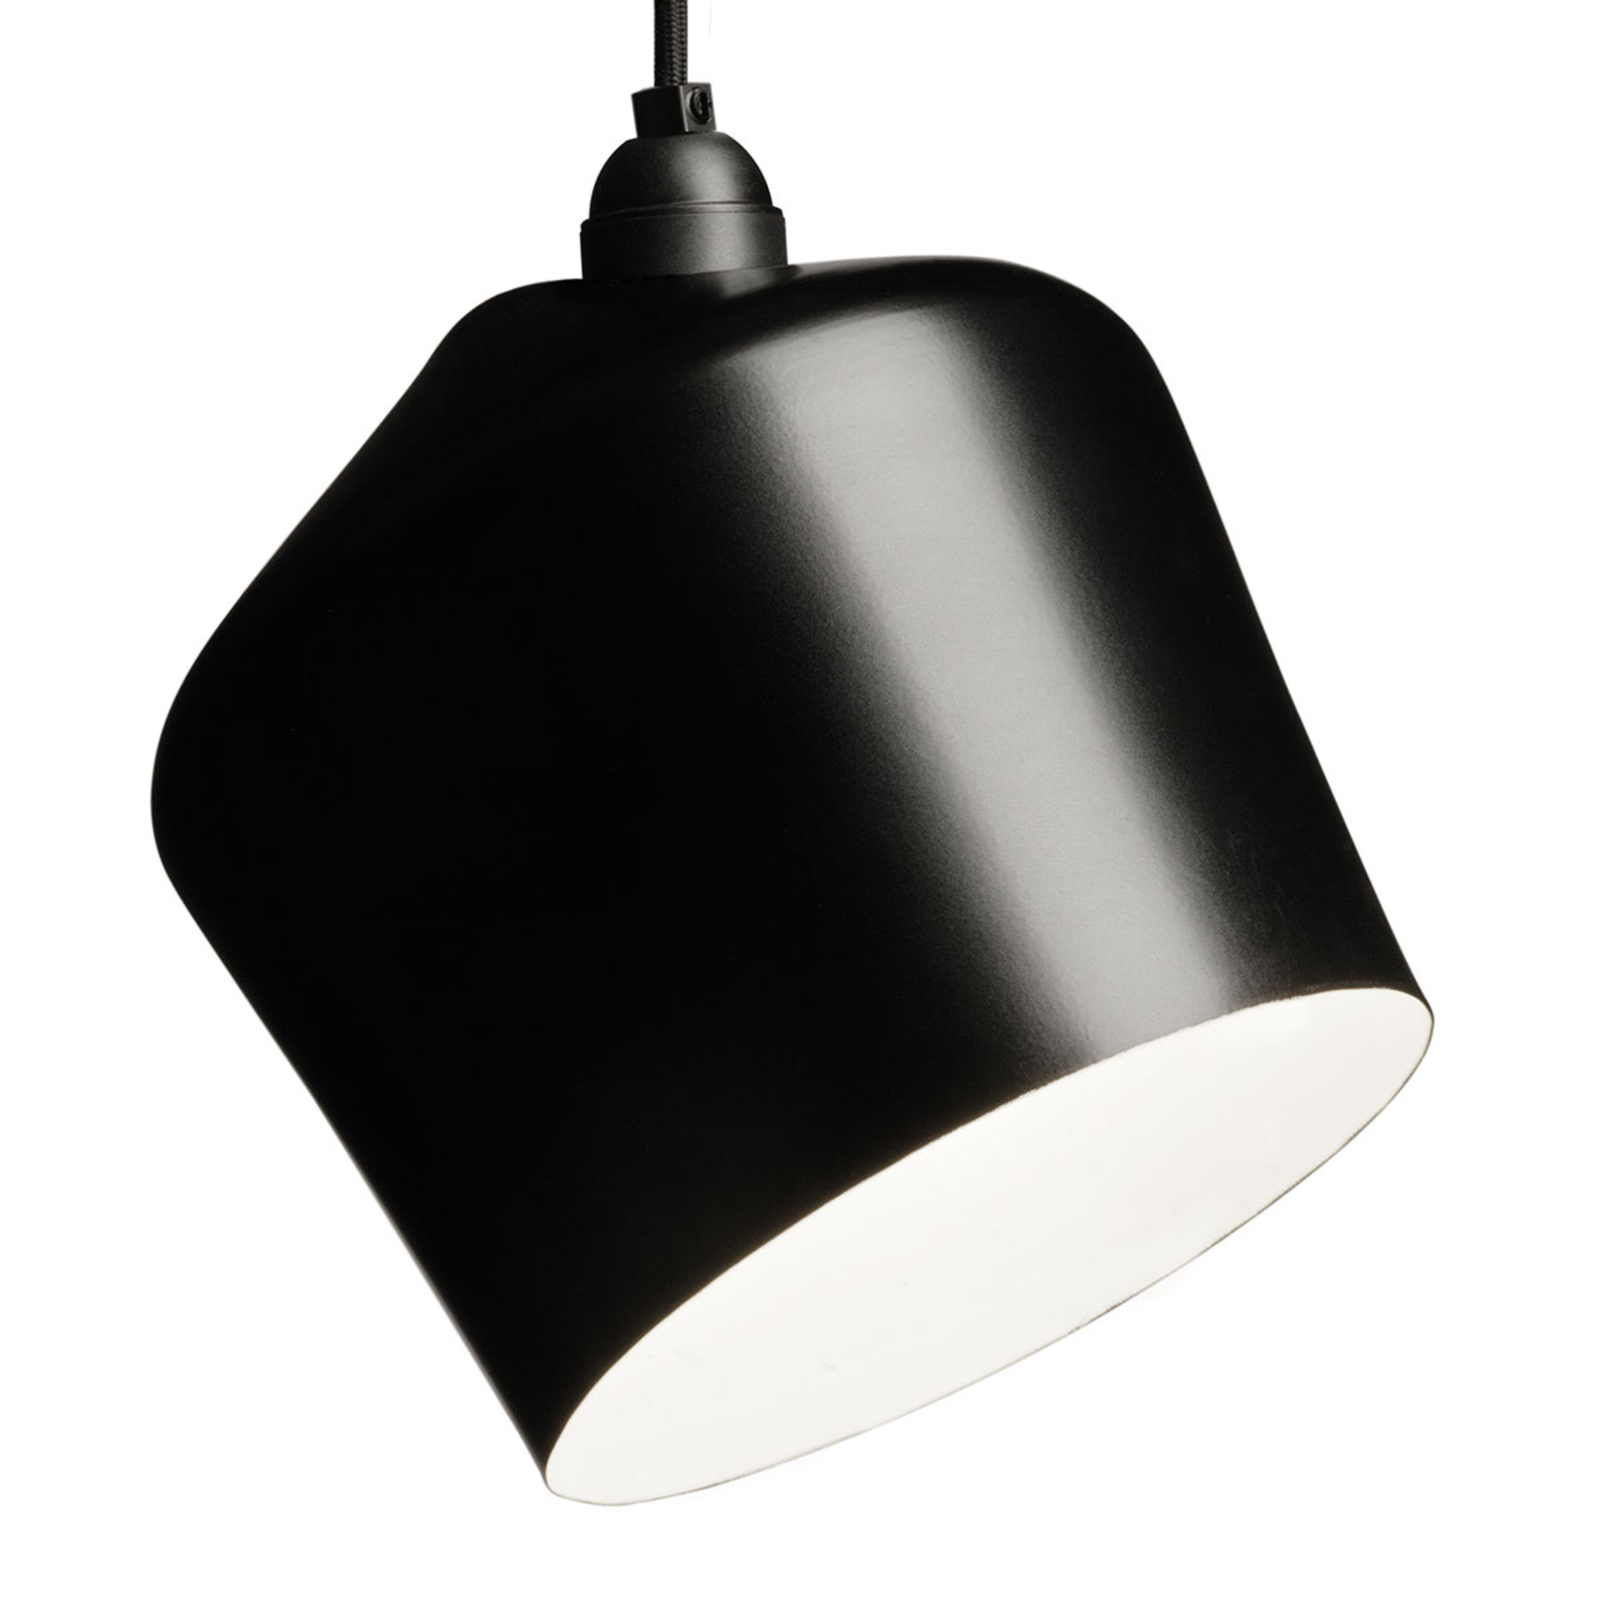 Innolux Pasila lámpara colgante de diseño negro